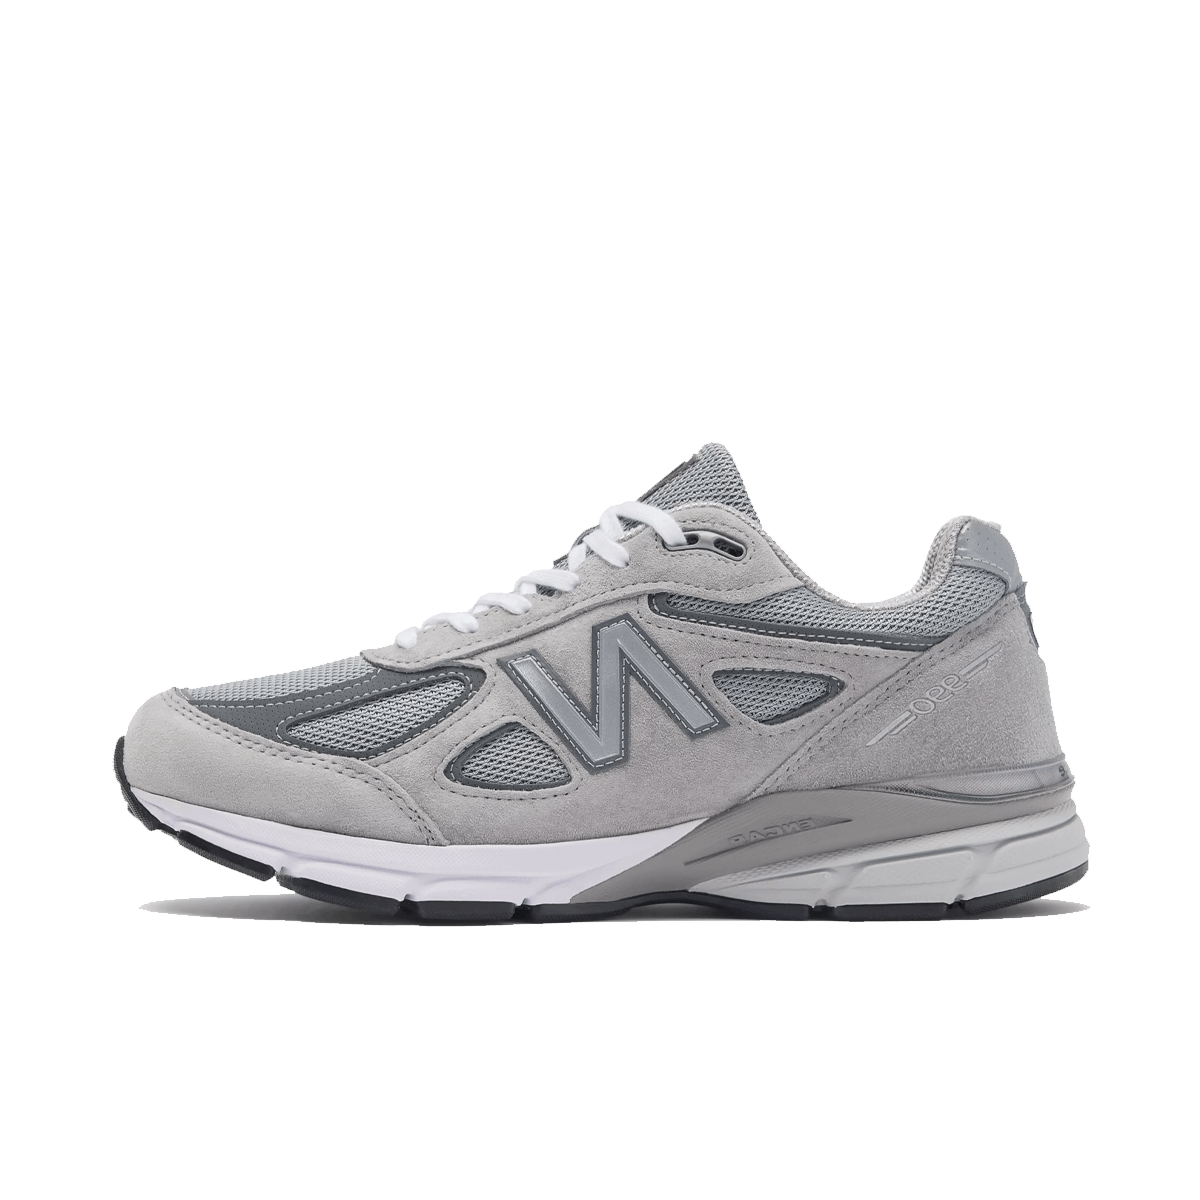 New Balance 990v4 'Grey Silver' - Made in USA